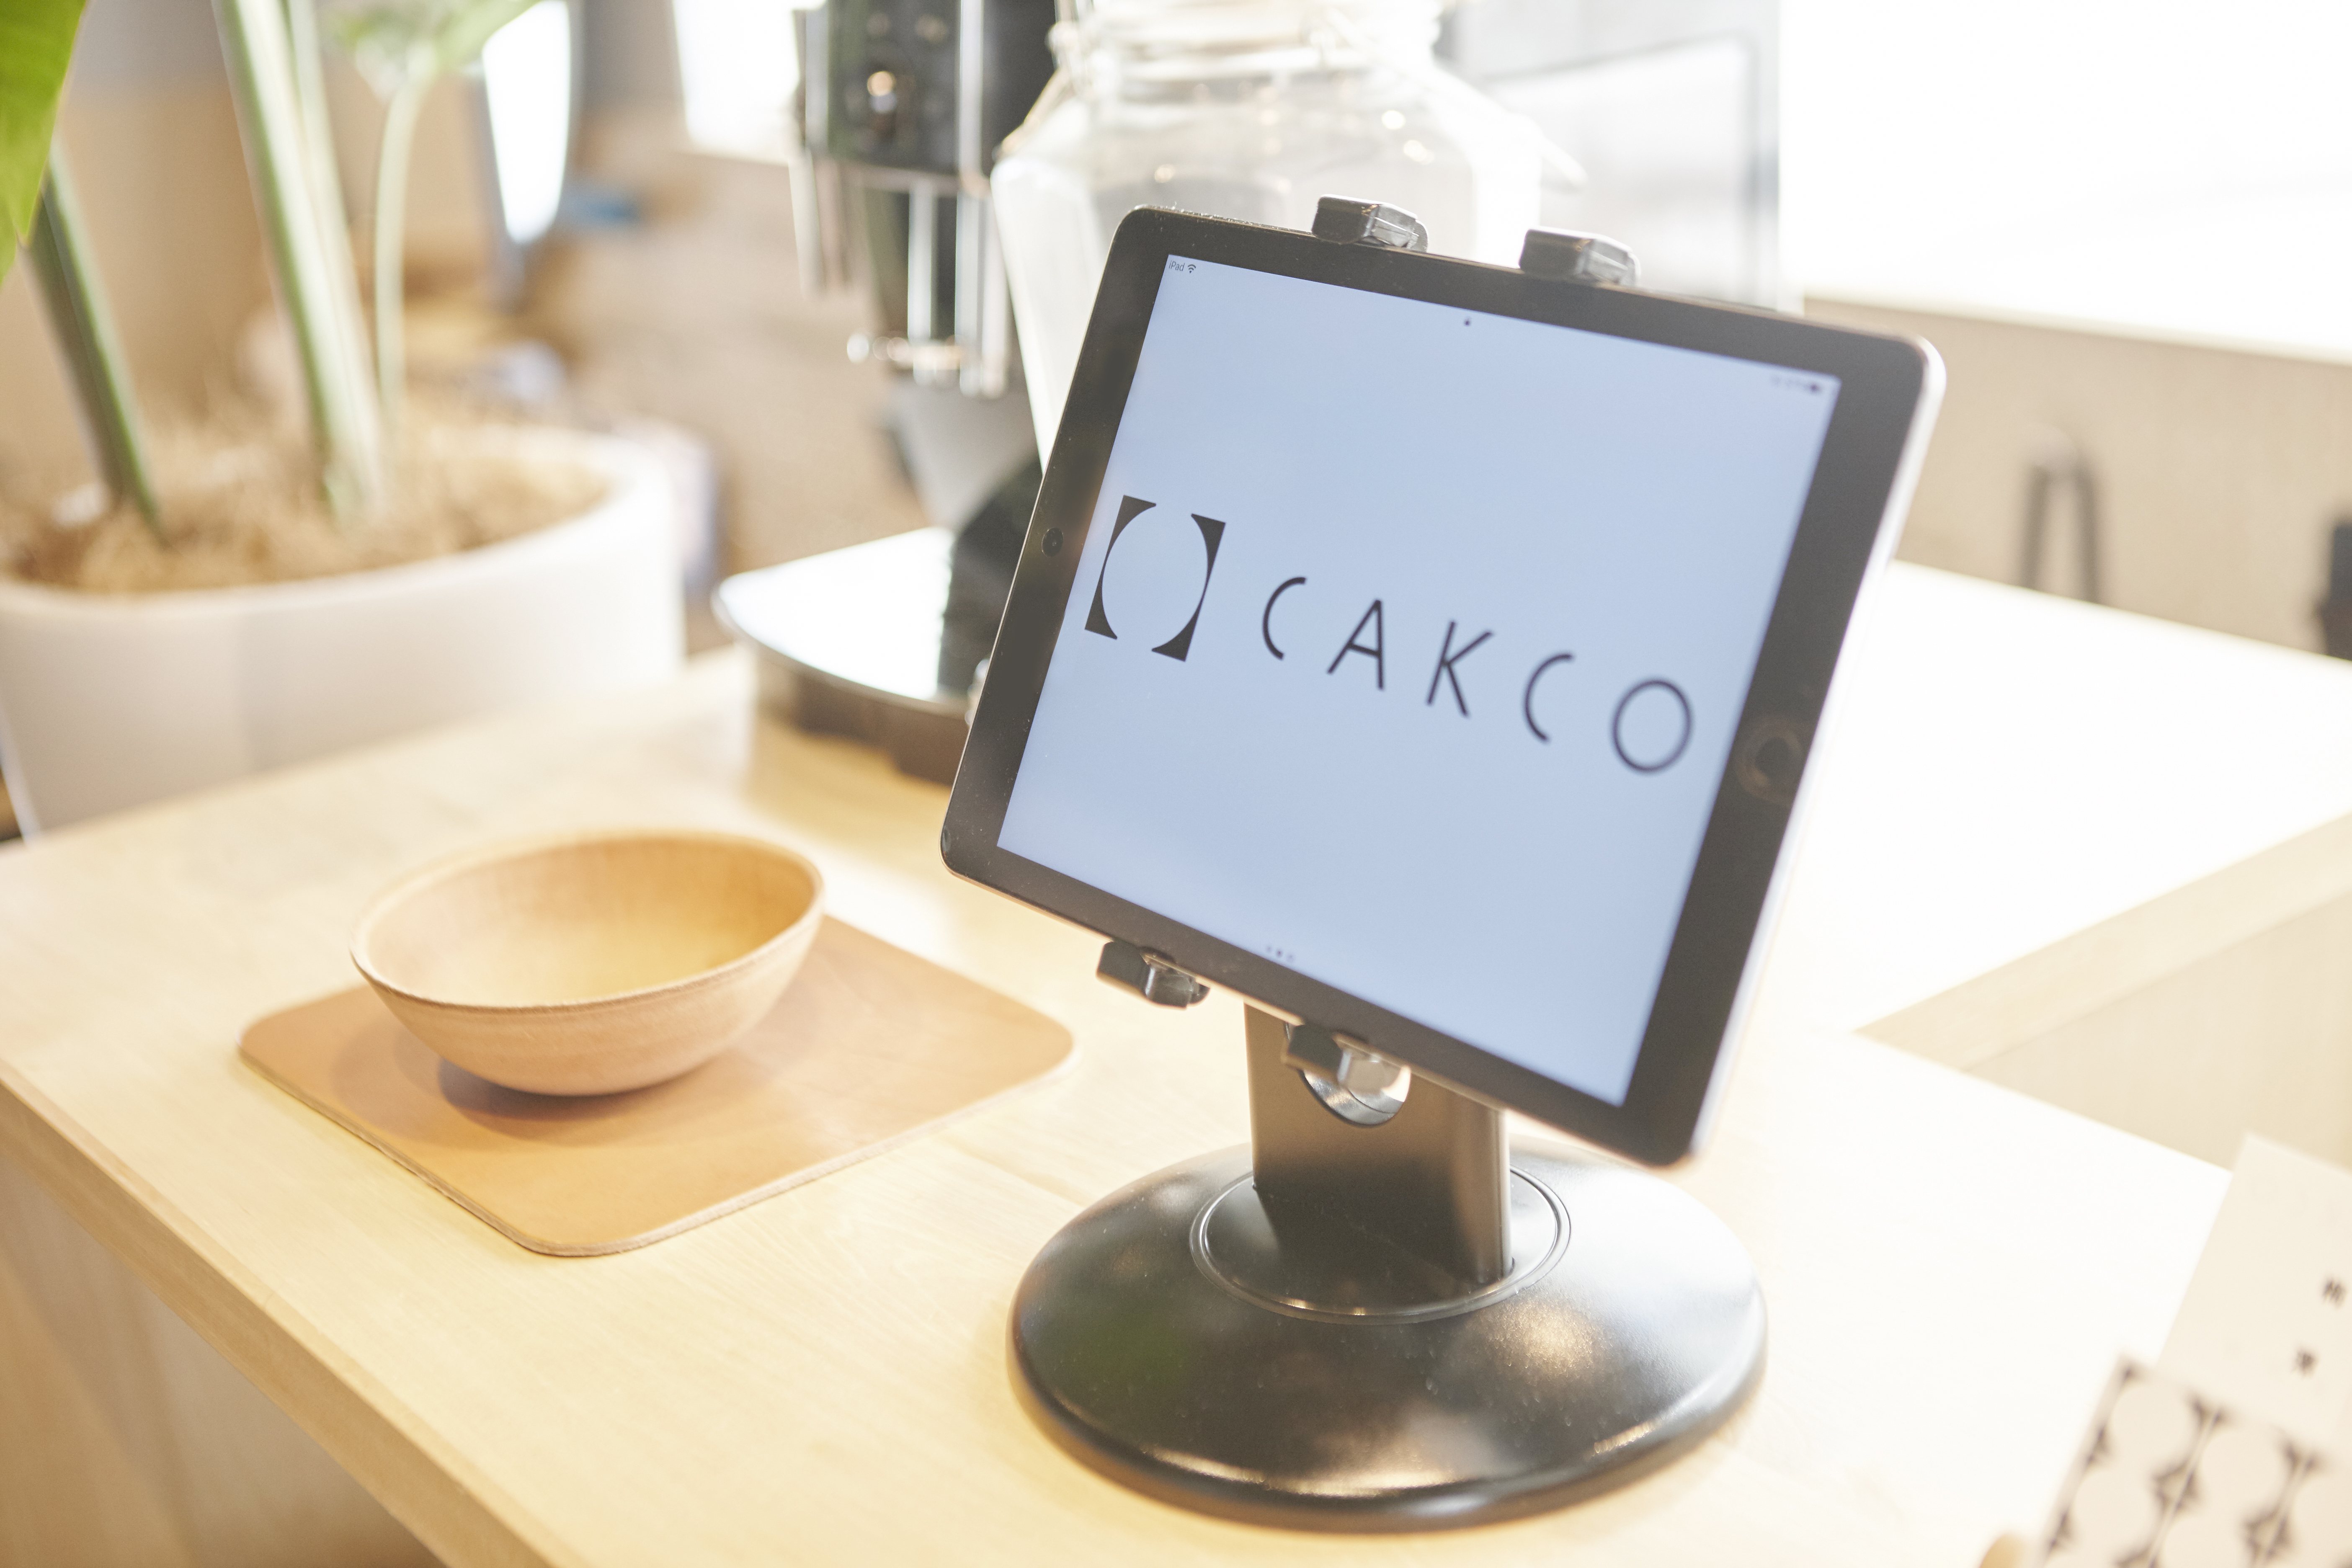 Cakco リクルート Cakco - restaurant tycoon 2 roblox codes robux gift card ireland